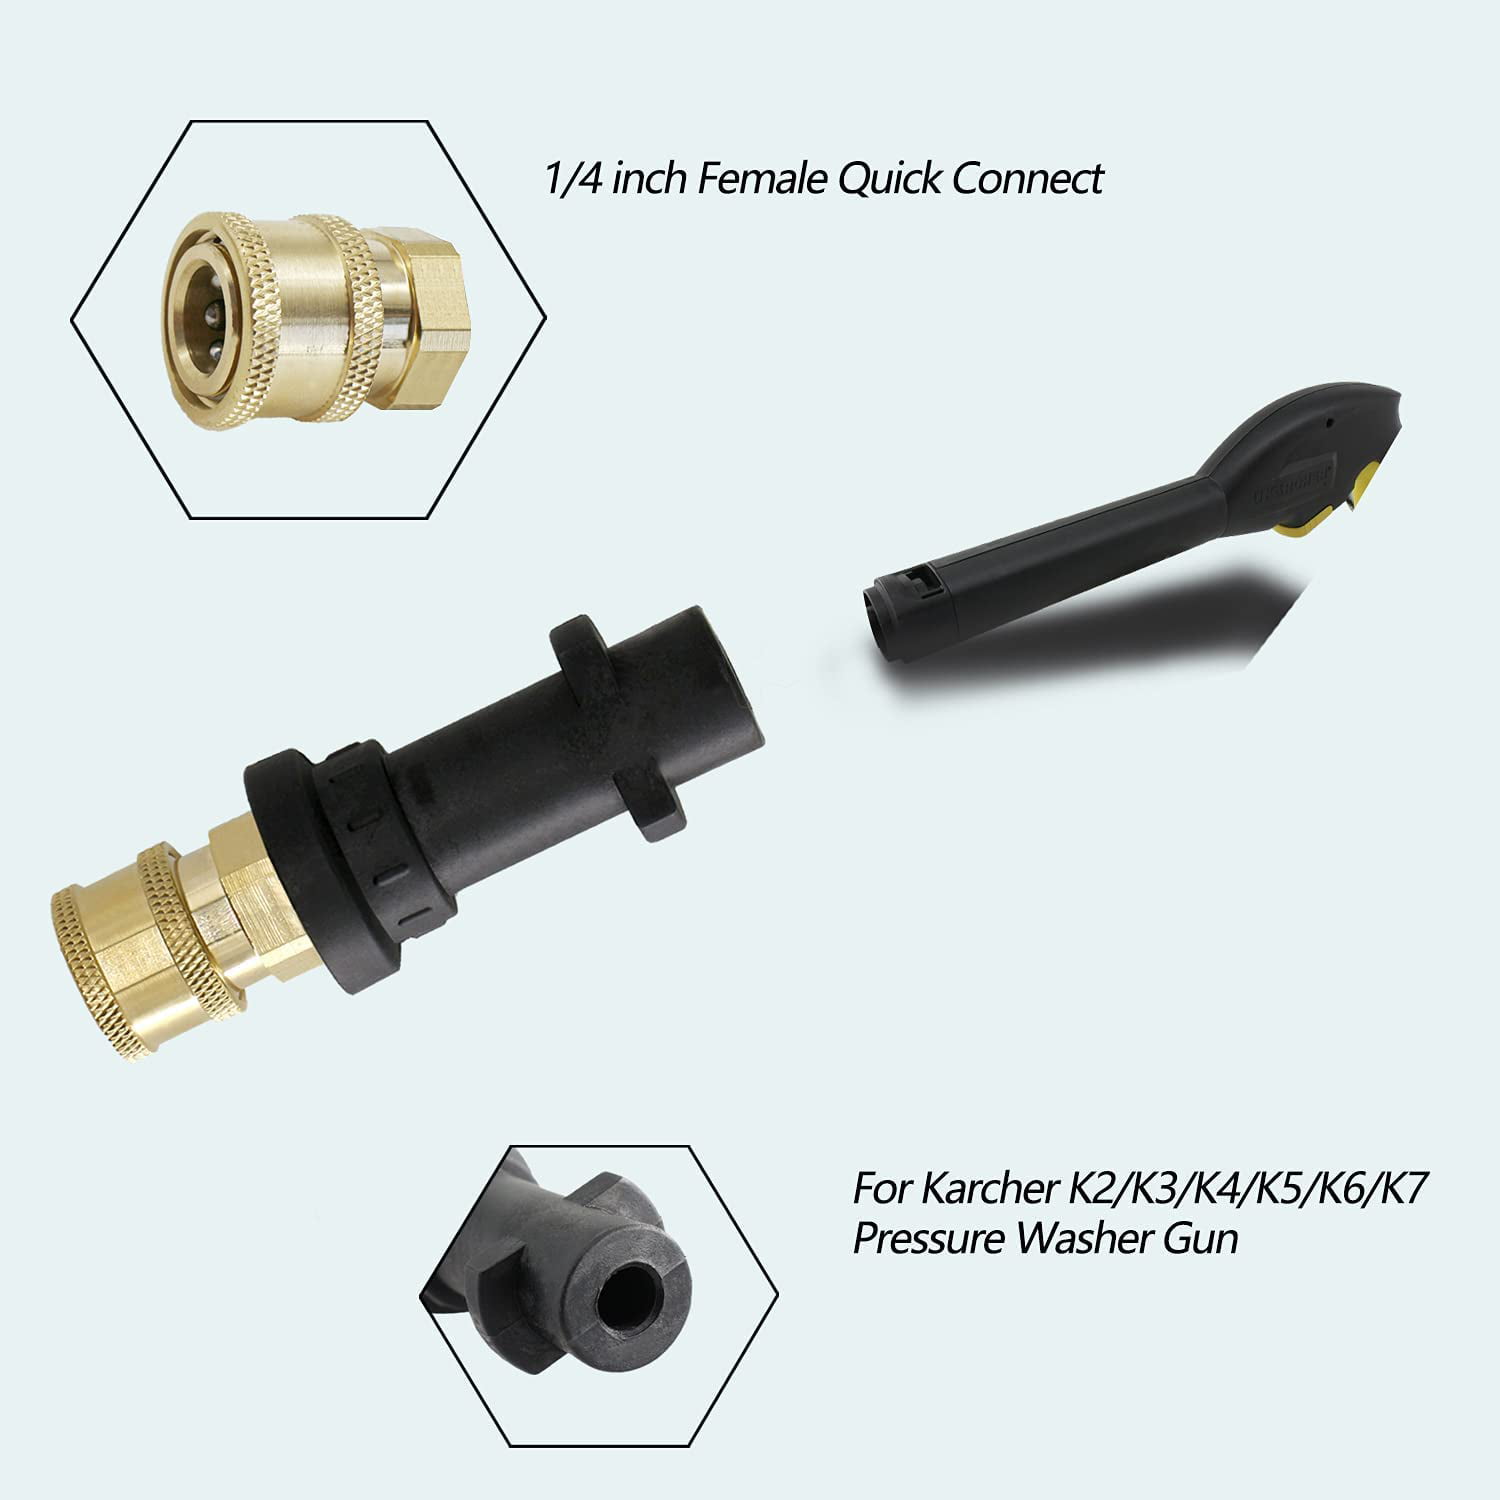 Pressure Washer Adaptors Fits Many Makes Inc Karcher,ETC  22mm Female & Male 